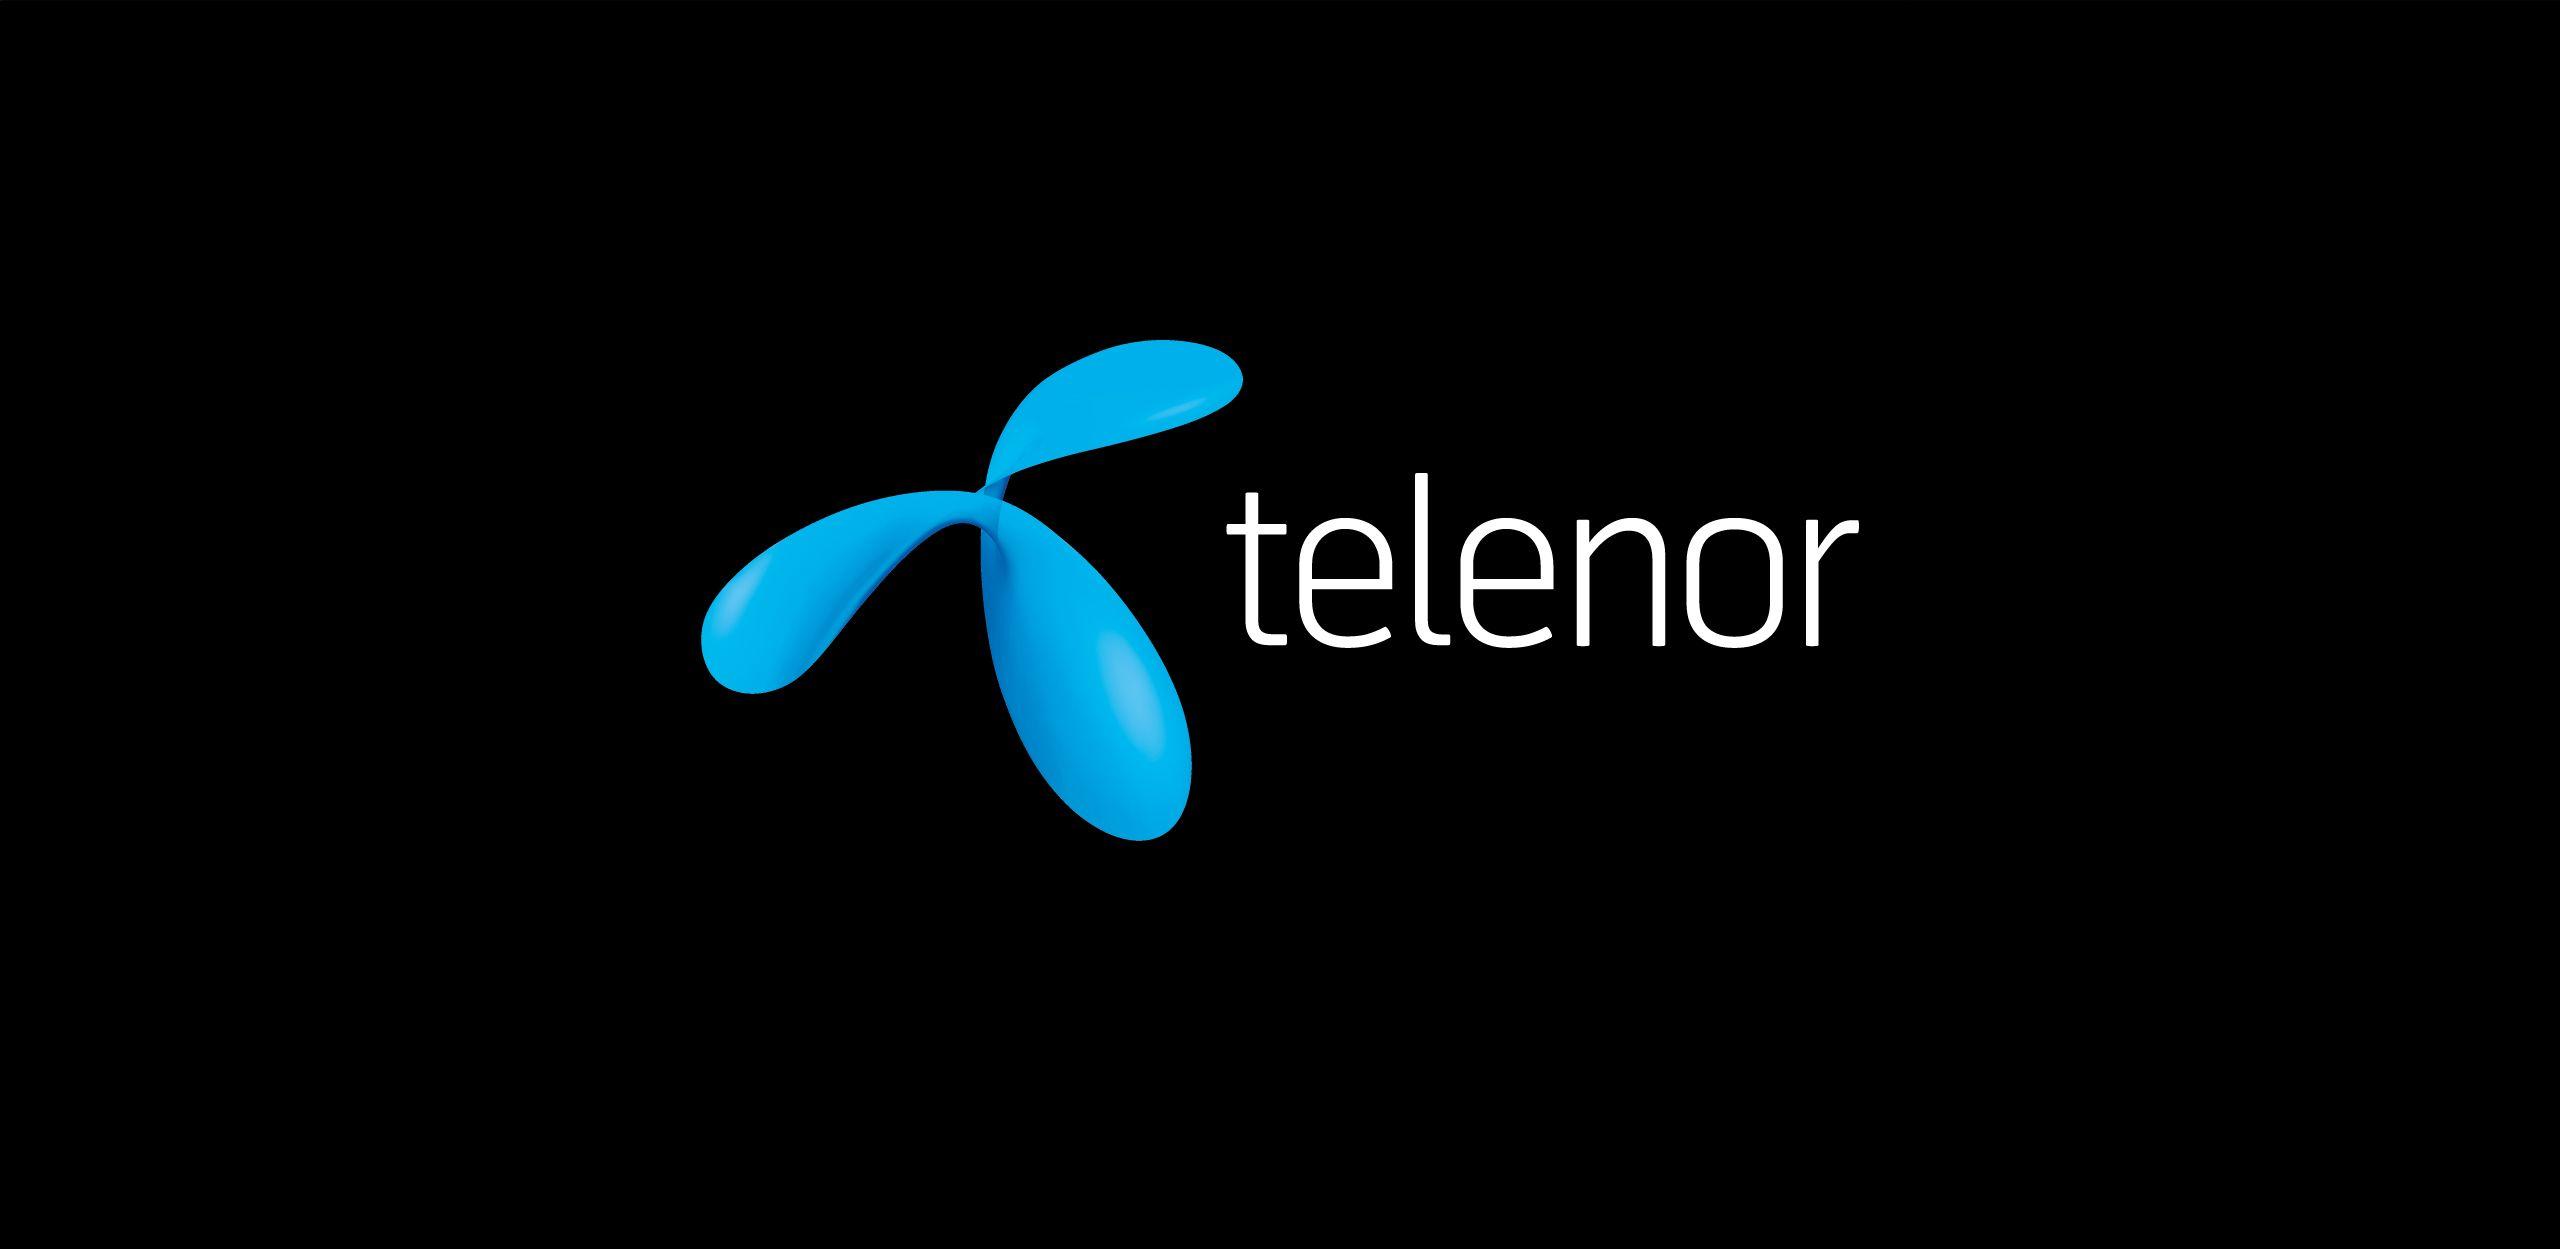 Telenor Logo - Newlyn logo design — Telenor · Gallery · Font Bureau